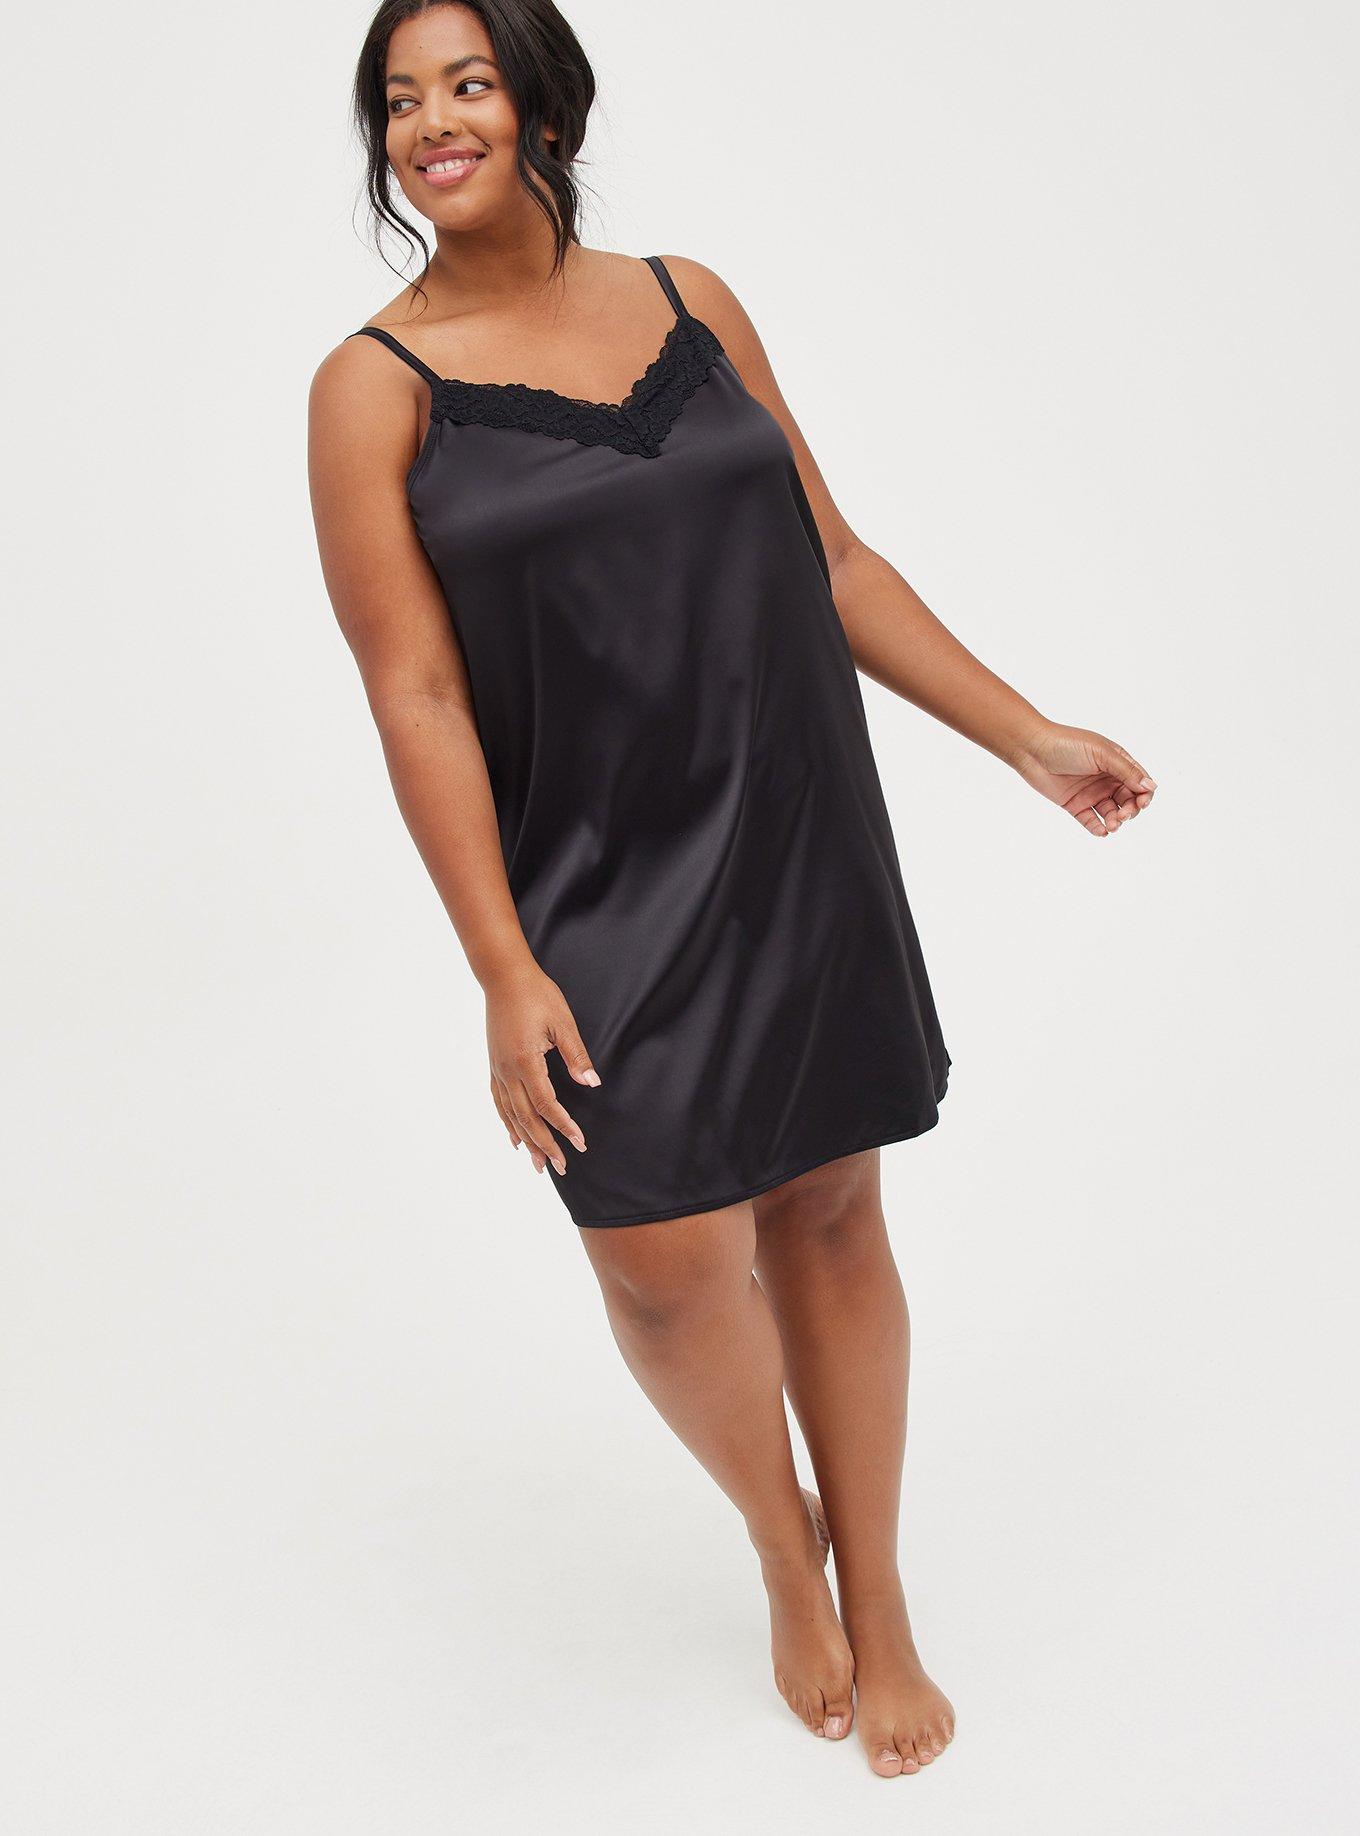 Torrid 5x 360 Smoothing Slip Dress Shapewear Dress Black Slip Dress NEW!